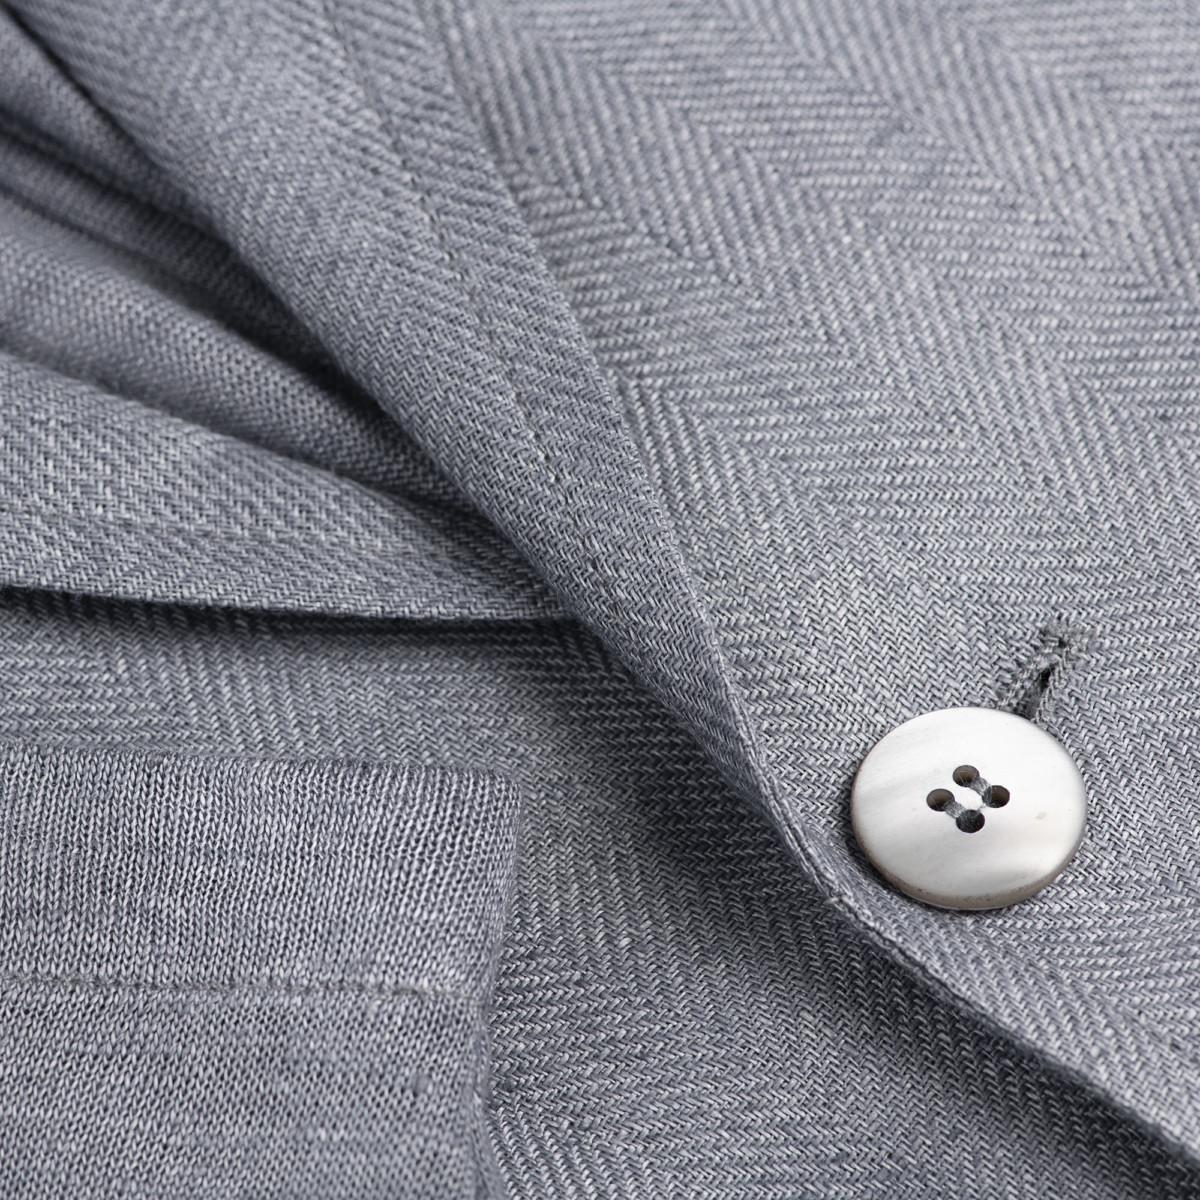 Giacca Sud Man 100% Capri dark grey linen jacket detail